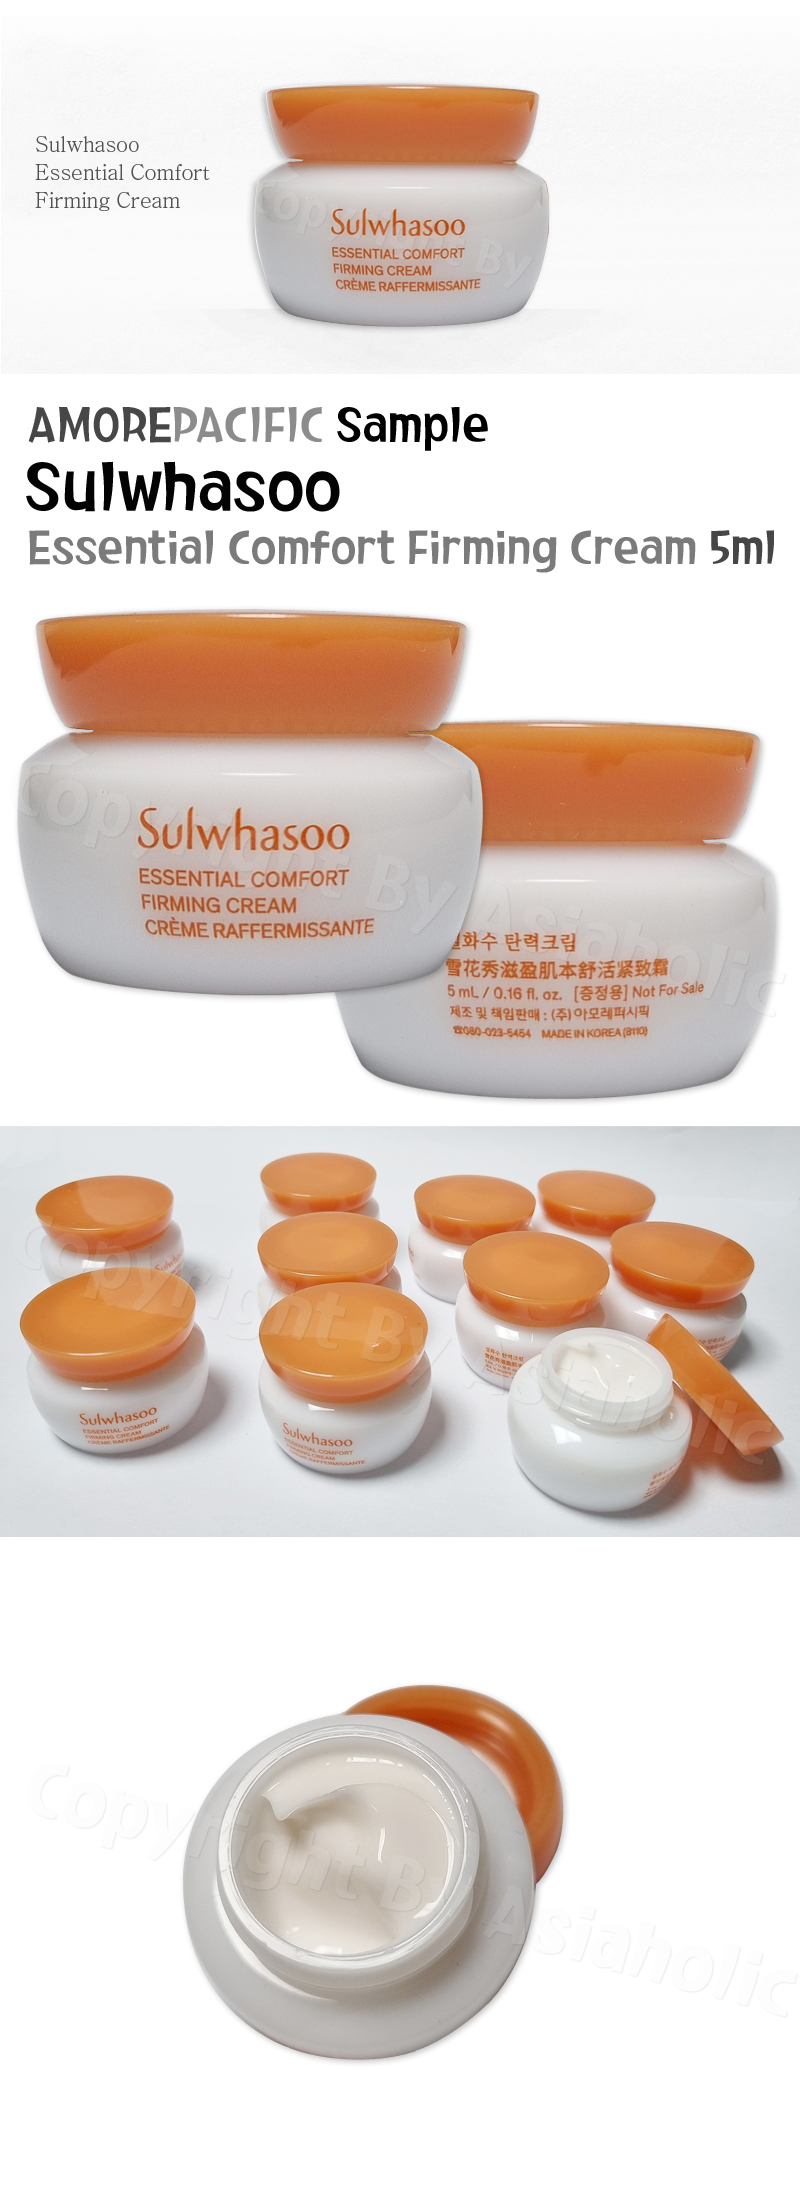 Sulwhasoo Essential Comfort Firming Cream 5ml x 5pcs (25ml) Sample Newest Version